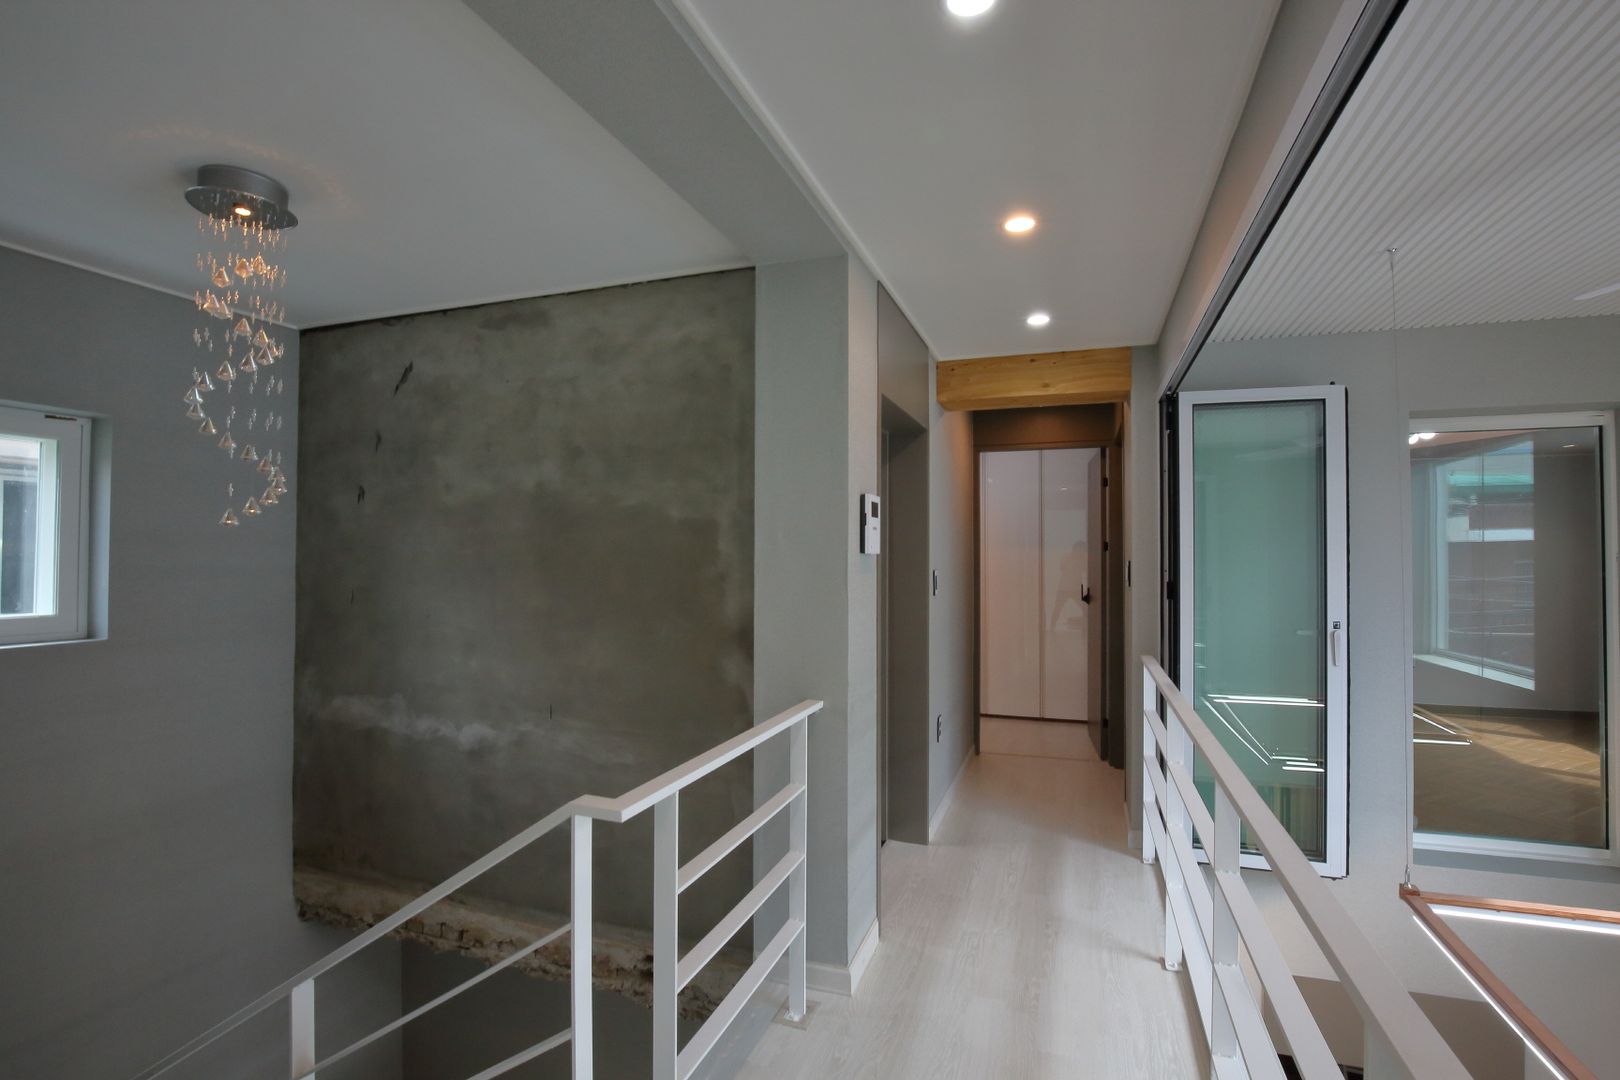 interior by INARK 대구 송현동 주택 리모델링 대구 전원주택 인아크 건축 설계 인테리어 디자인, inark [인아크 건축 설계 디자인] inark [인아크 건축 설계 디자인] Minimalist corridor, hallway & stairs